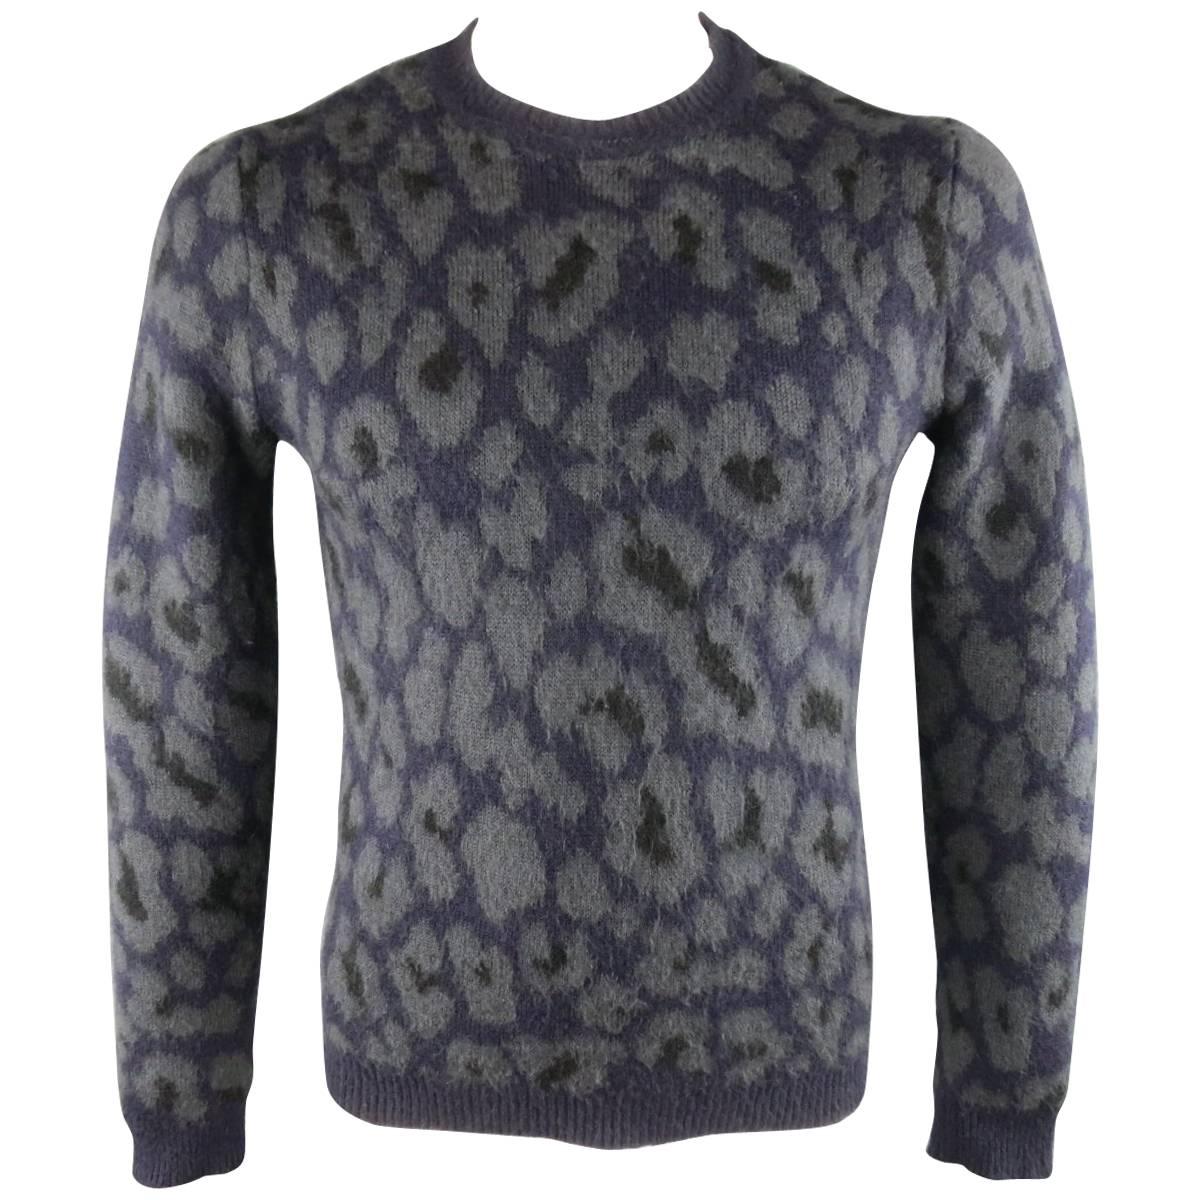 RAF SIMONS Size S Navy & Grey Cheetah Print Mohair Blend Pullover Sweater